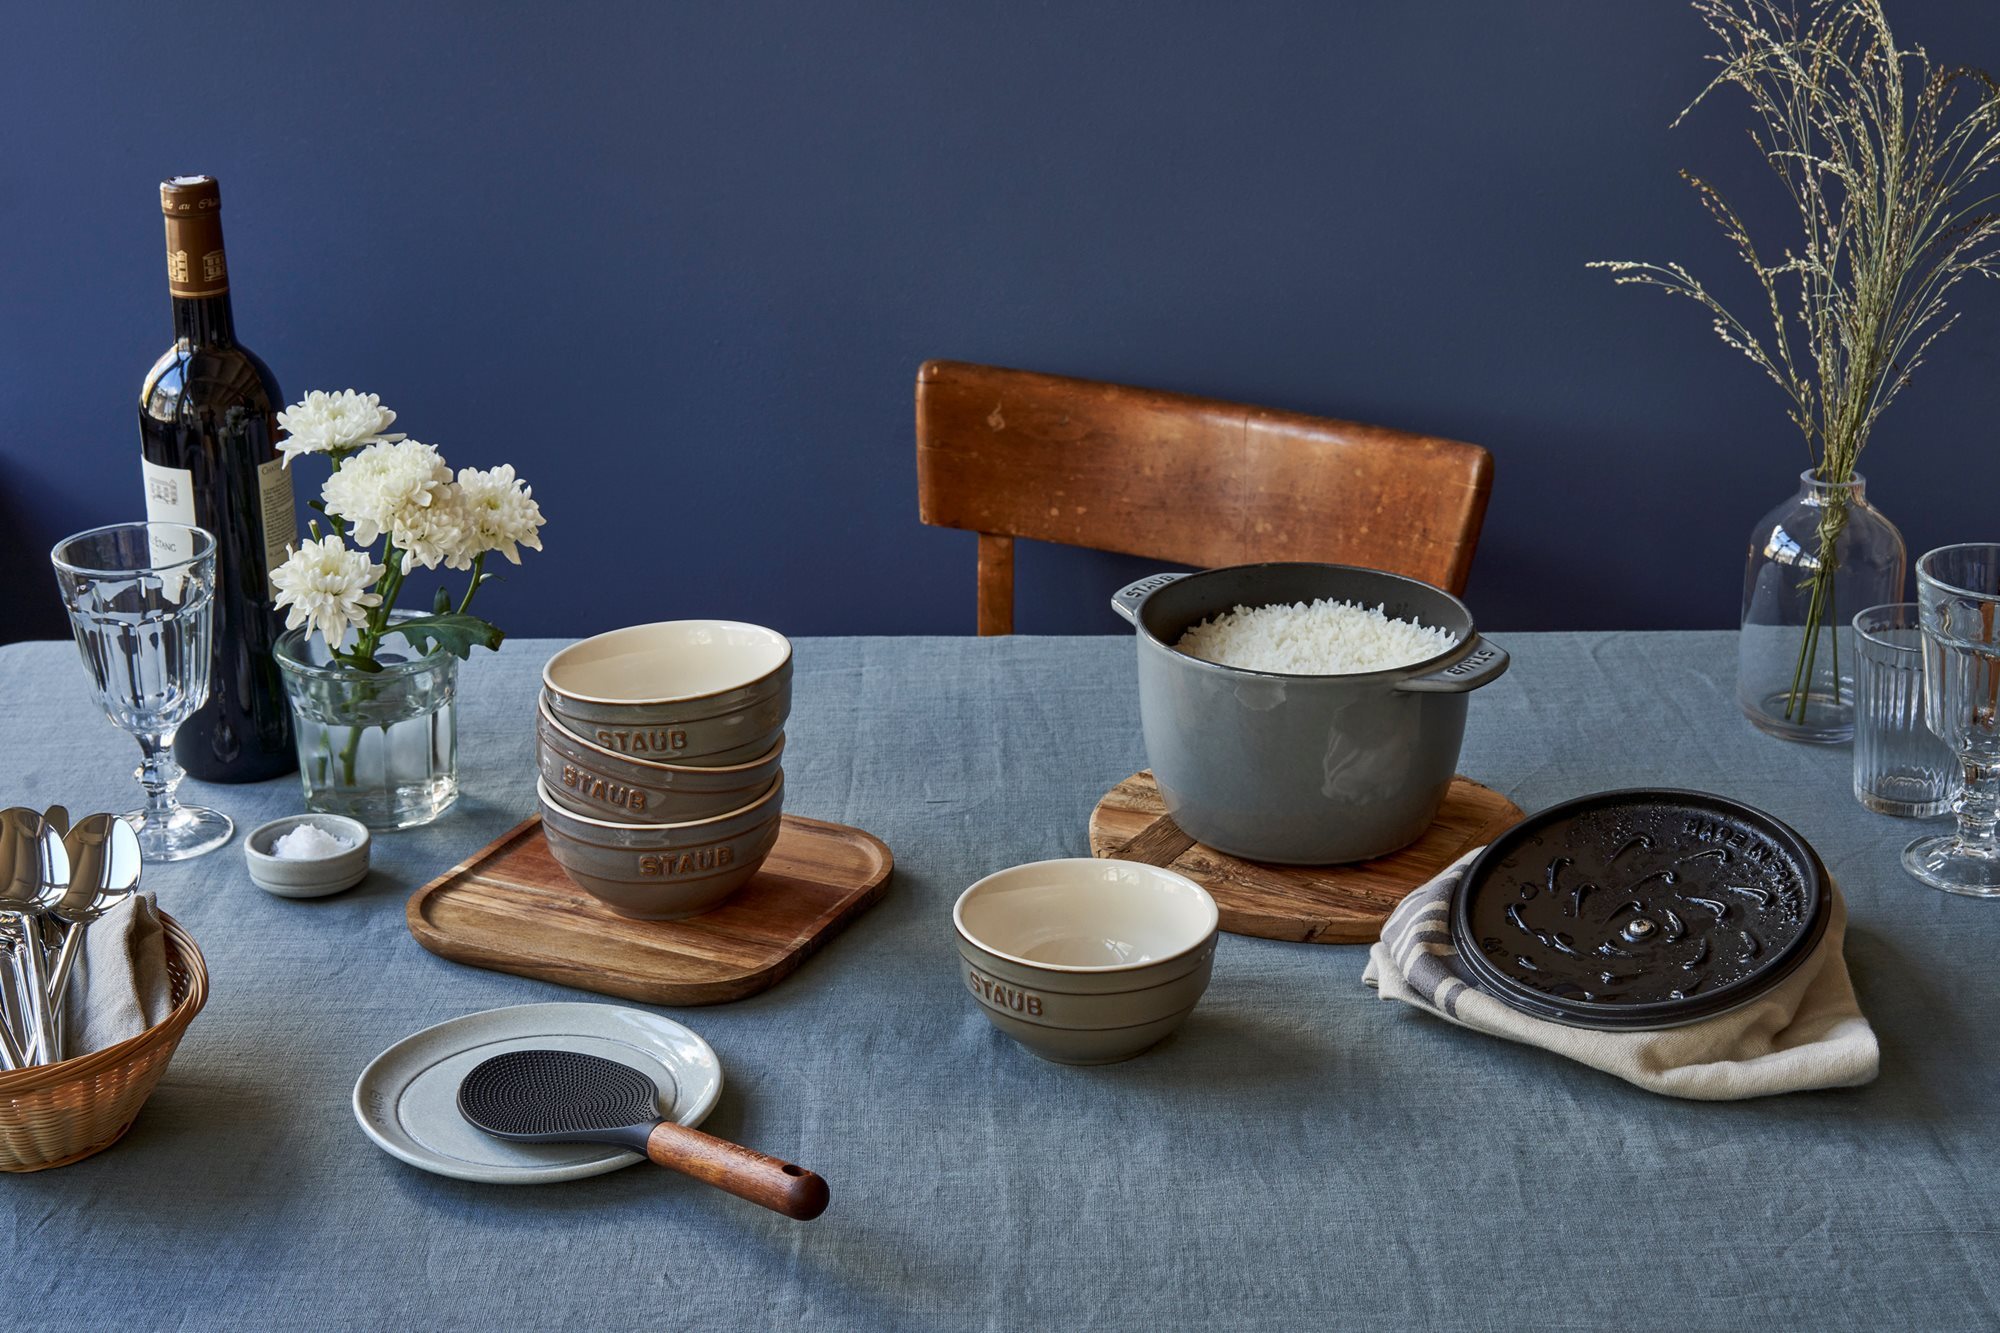 Cocote stock photo. Image of household, saucepan, dishware